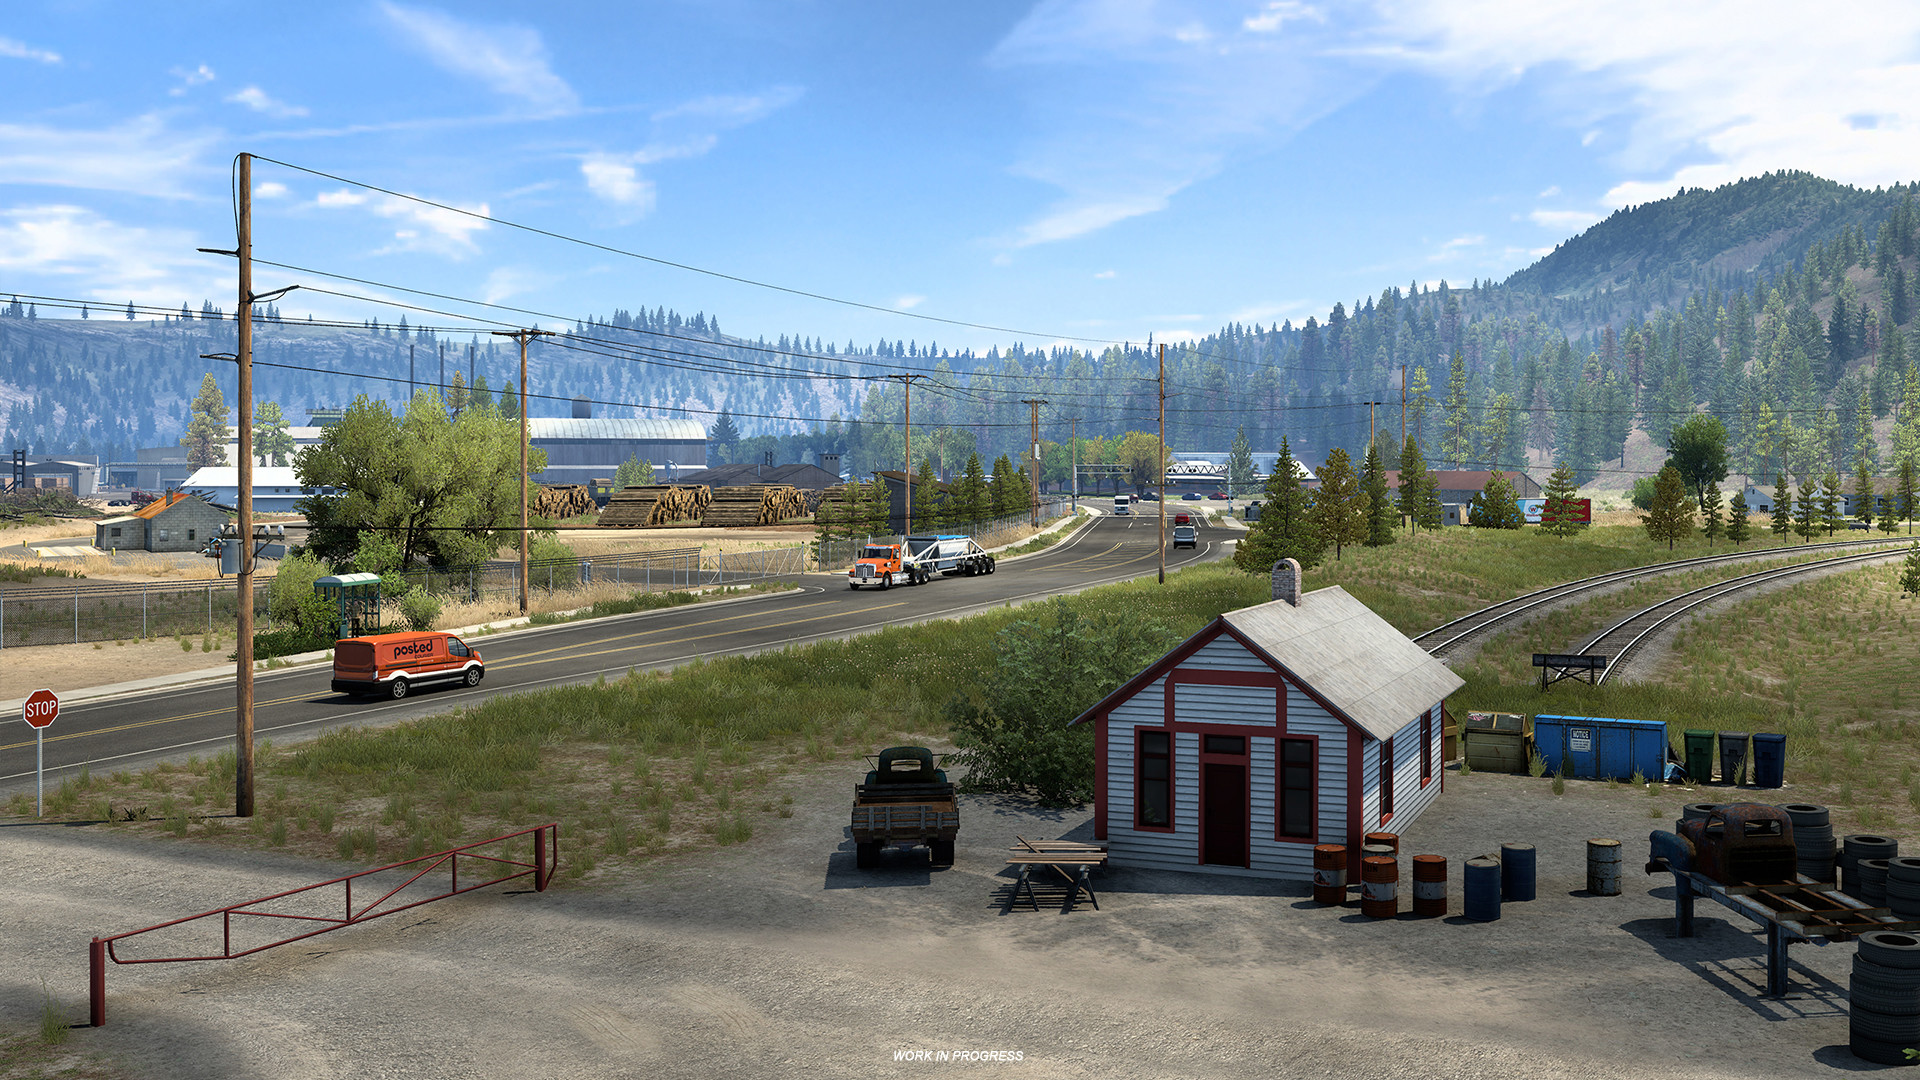 American Truck Simulator: Montana PC Requisitos Minmos